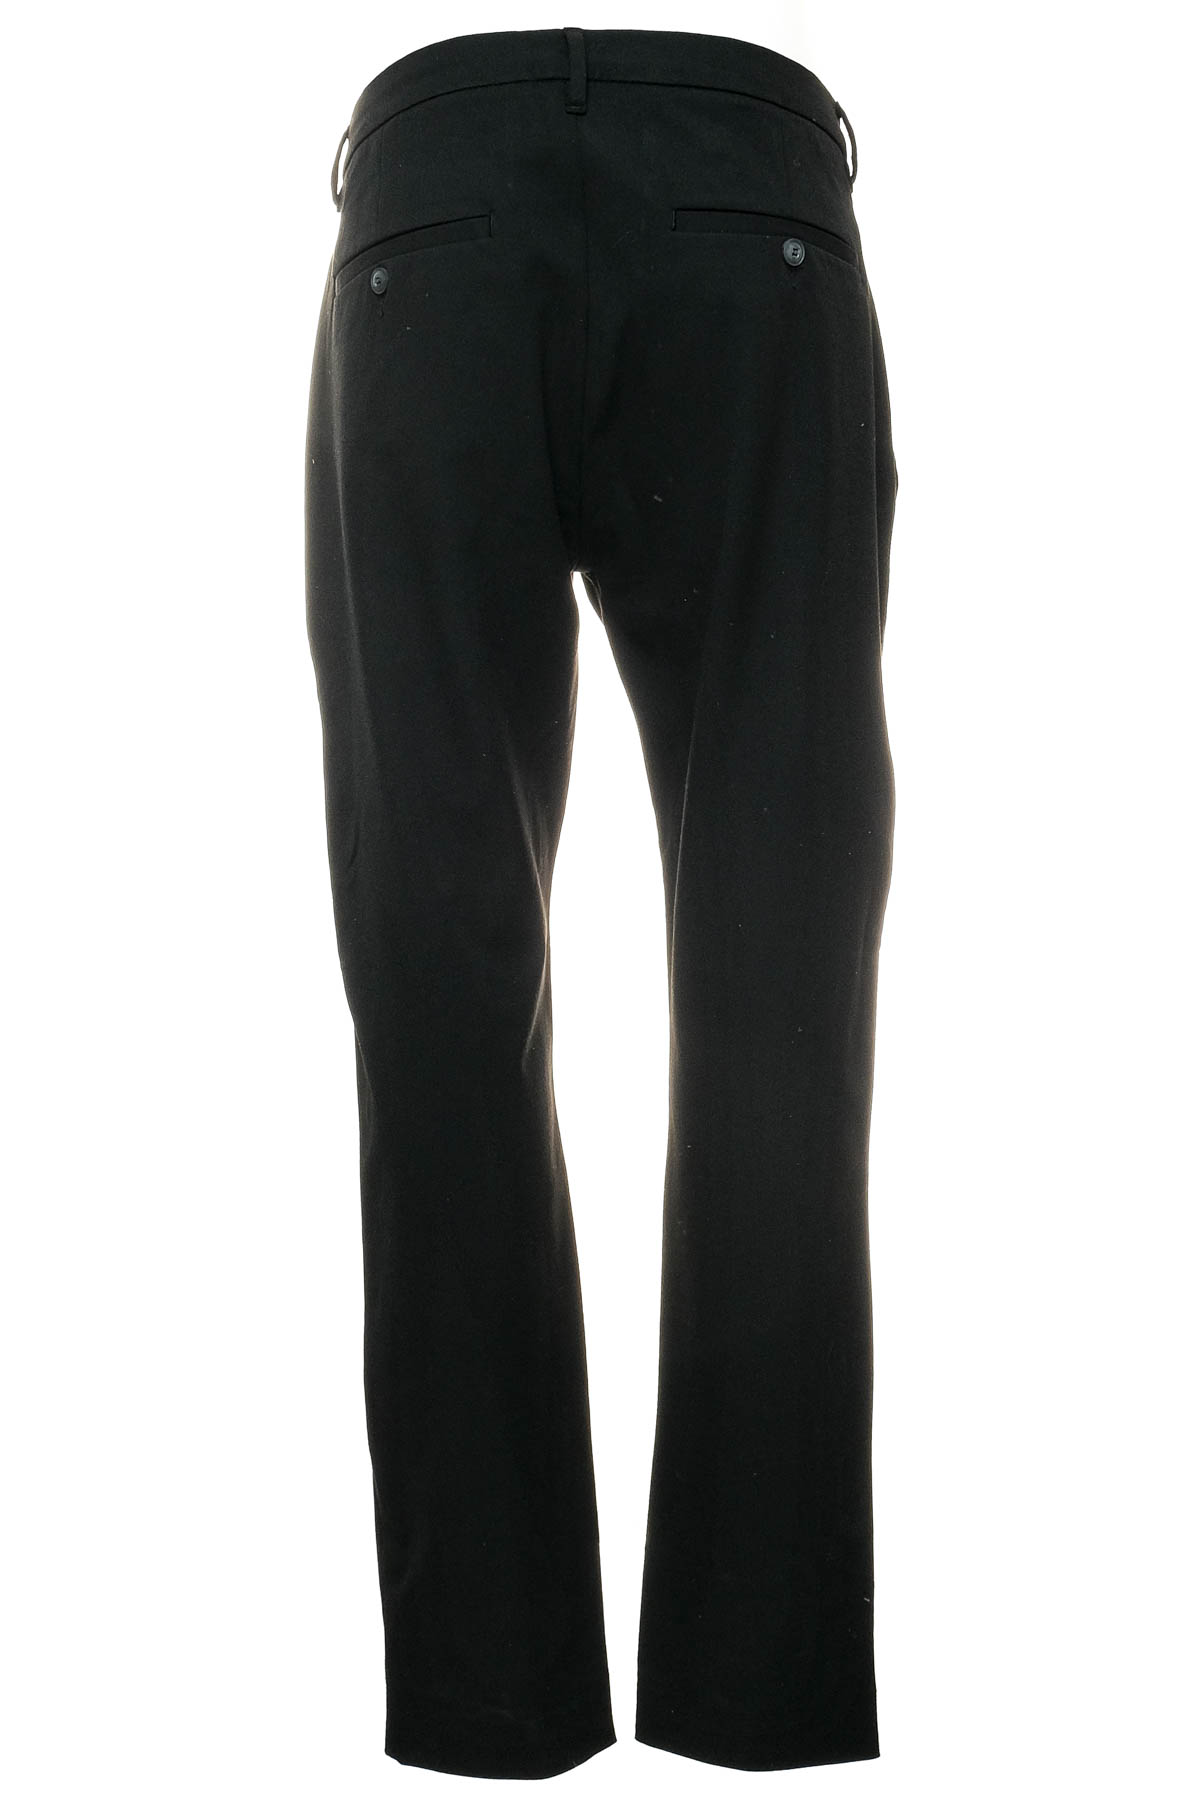 Men's trousers - PLAIN - 1